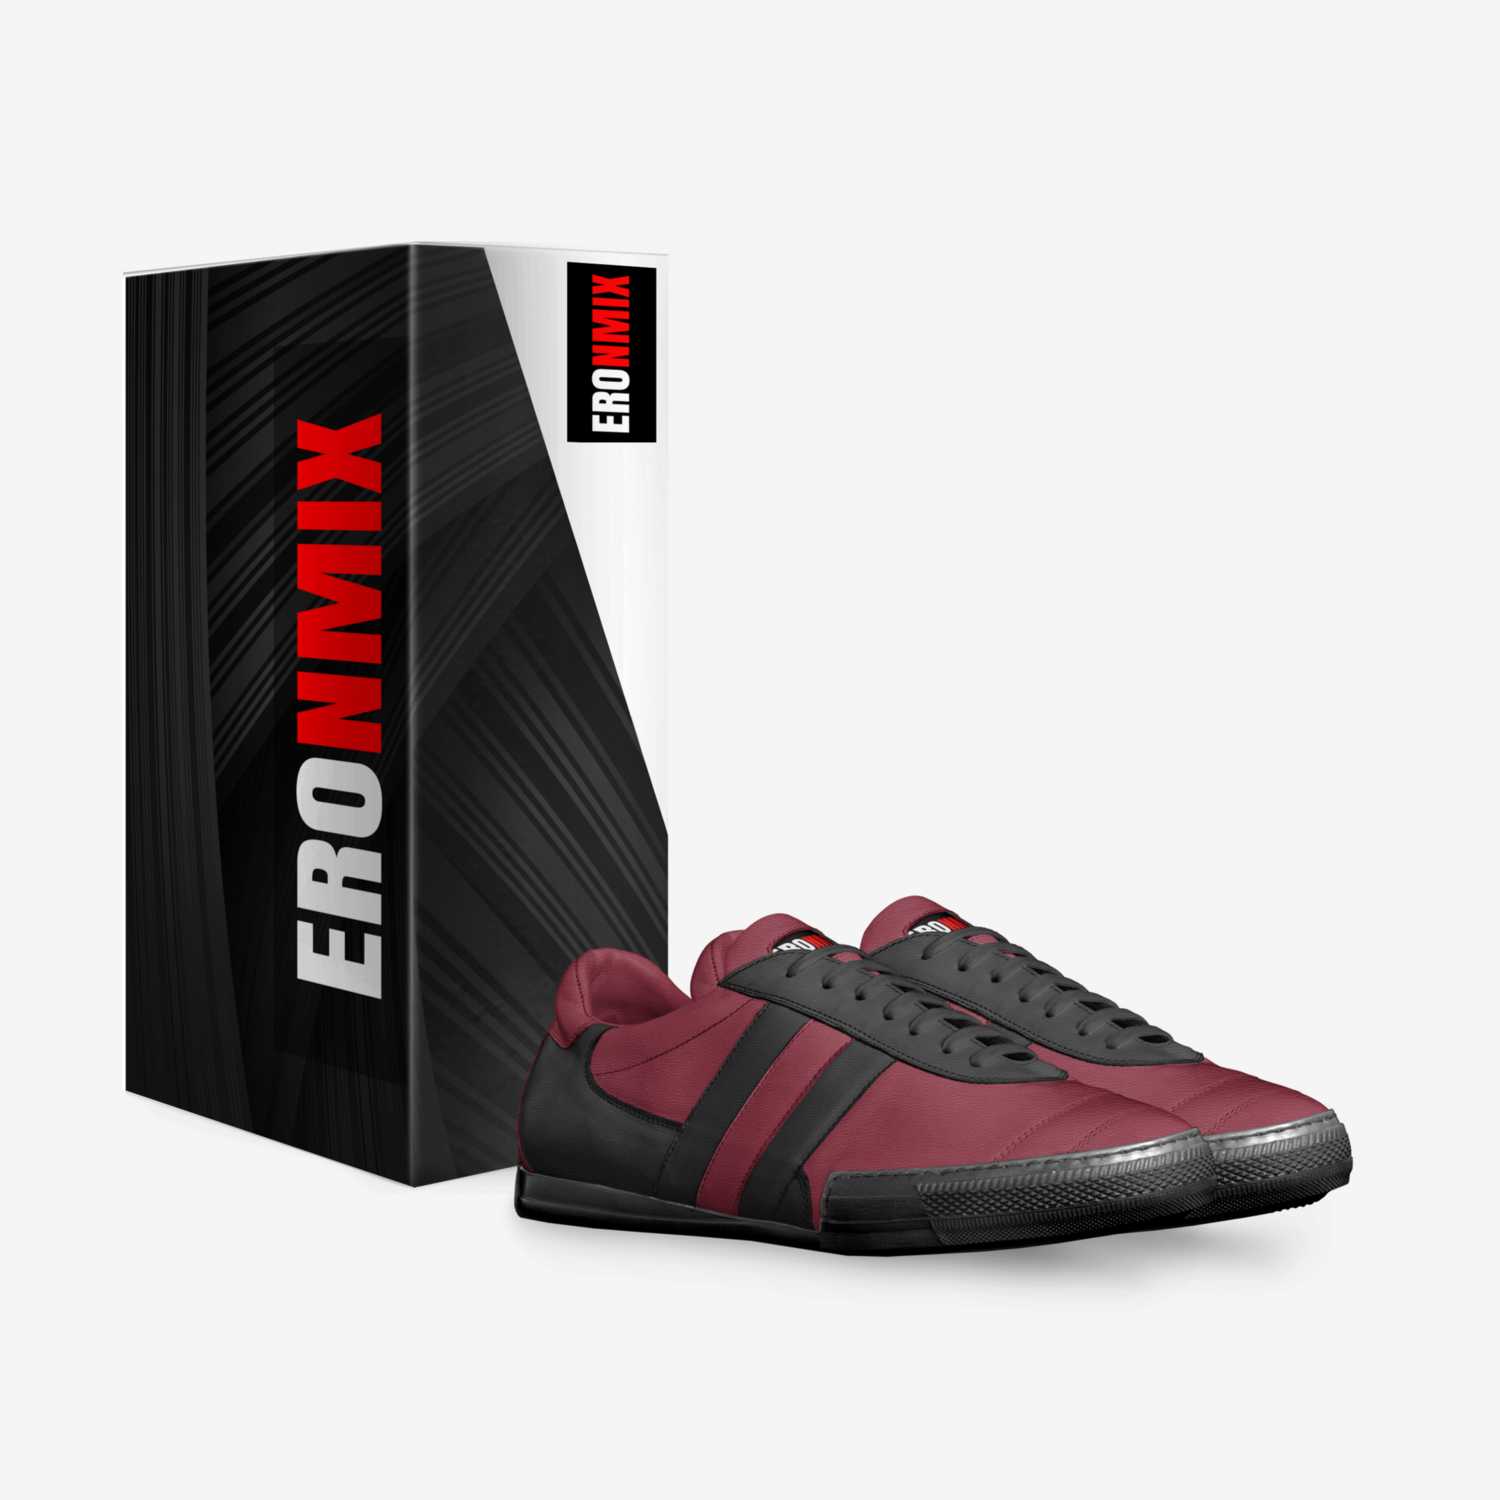 Eronmix Triumphz custom made in Italy shoes by Eduardo Ramirez | Box view